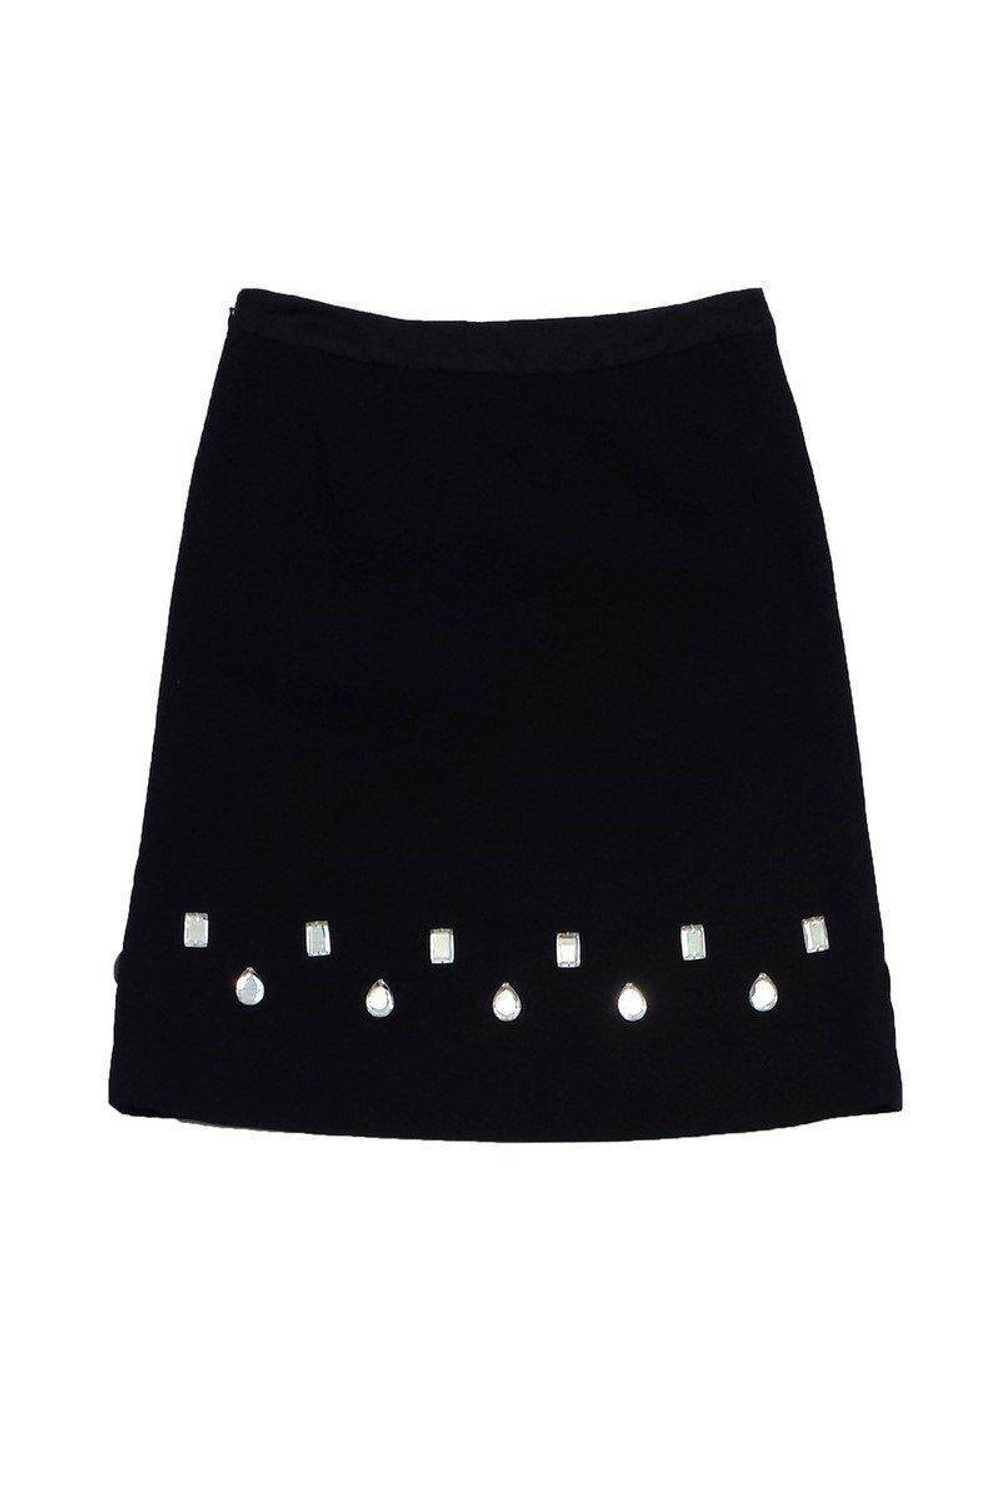 Tracy Reese - Black Wool Embellished Skirt Sz 4 - image 2